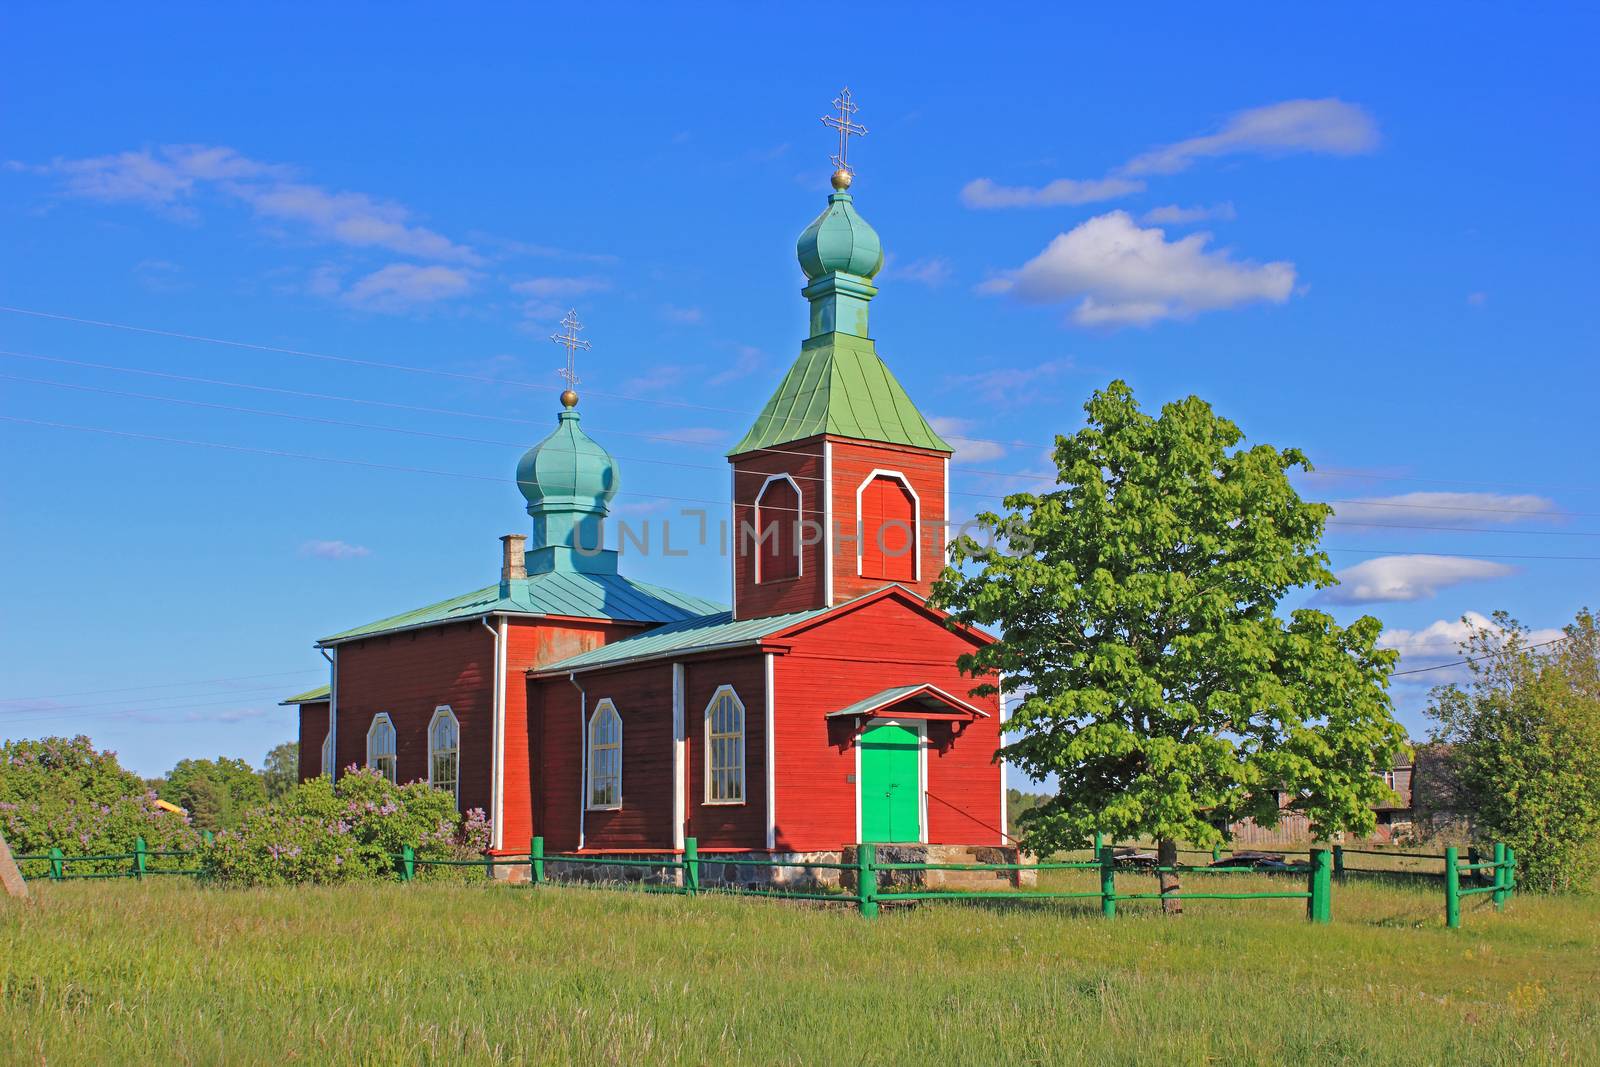 Orthodox  church in Metsküla village. Saaremaa island, Estonia.
Evening sunlight and blue, cloudy sky in background.